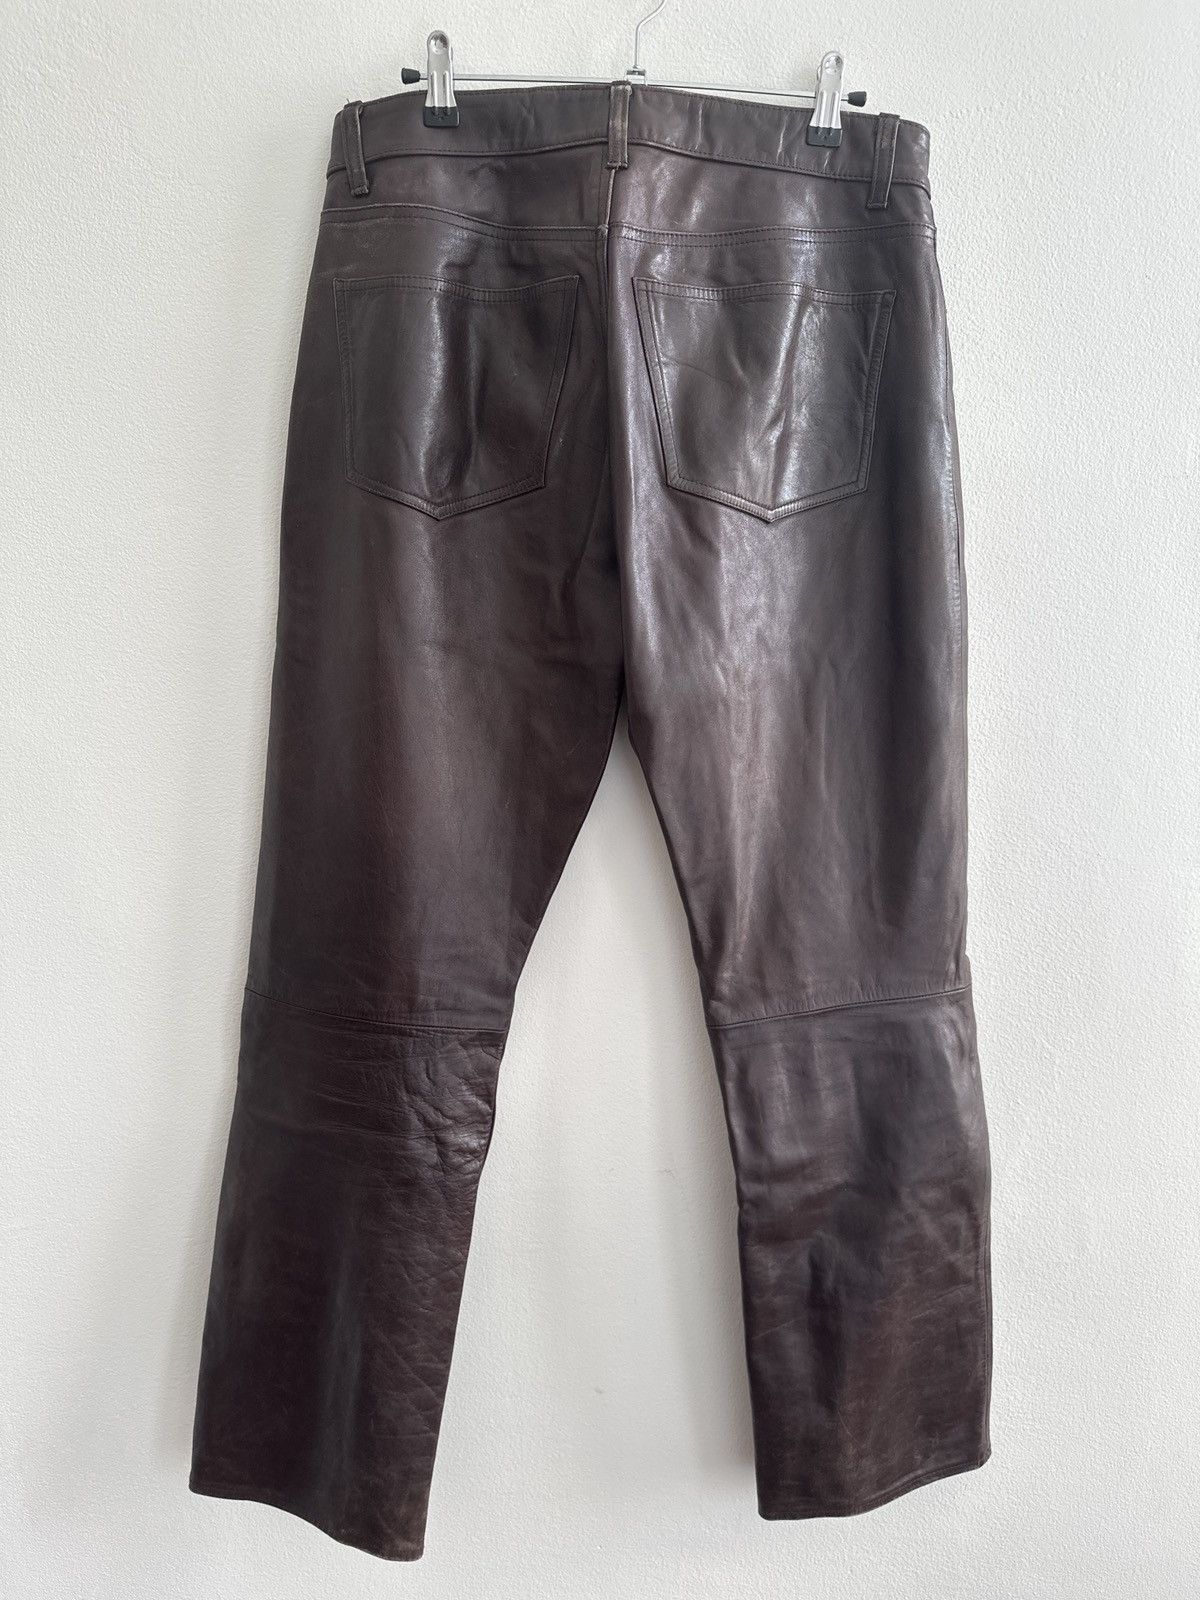 Vintage Vintage Gap Brown Bootcut Leather Pants Size US 32 / EU 48 - 2 Preview